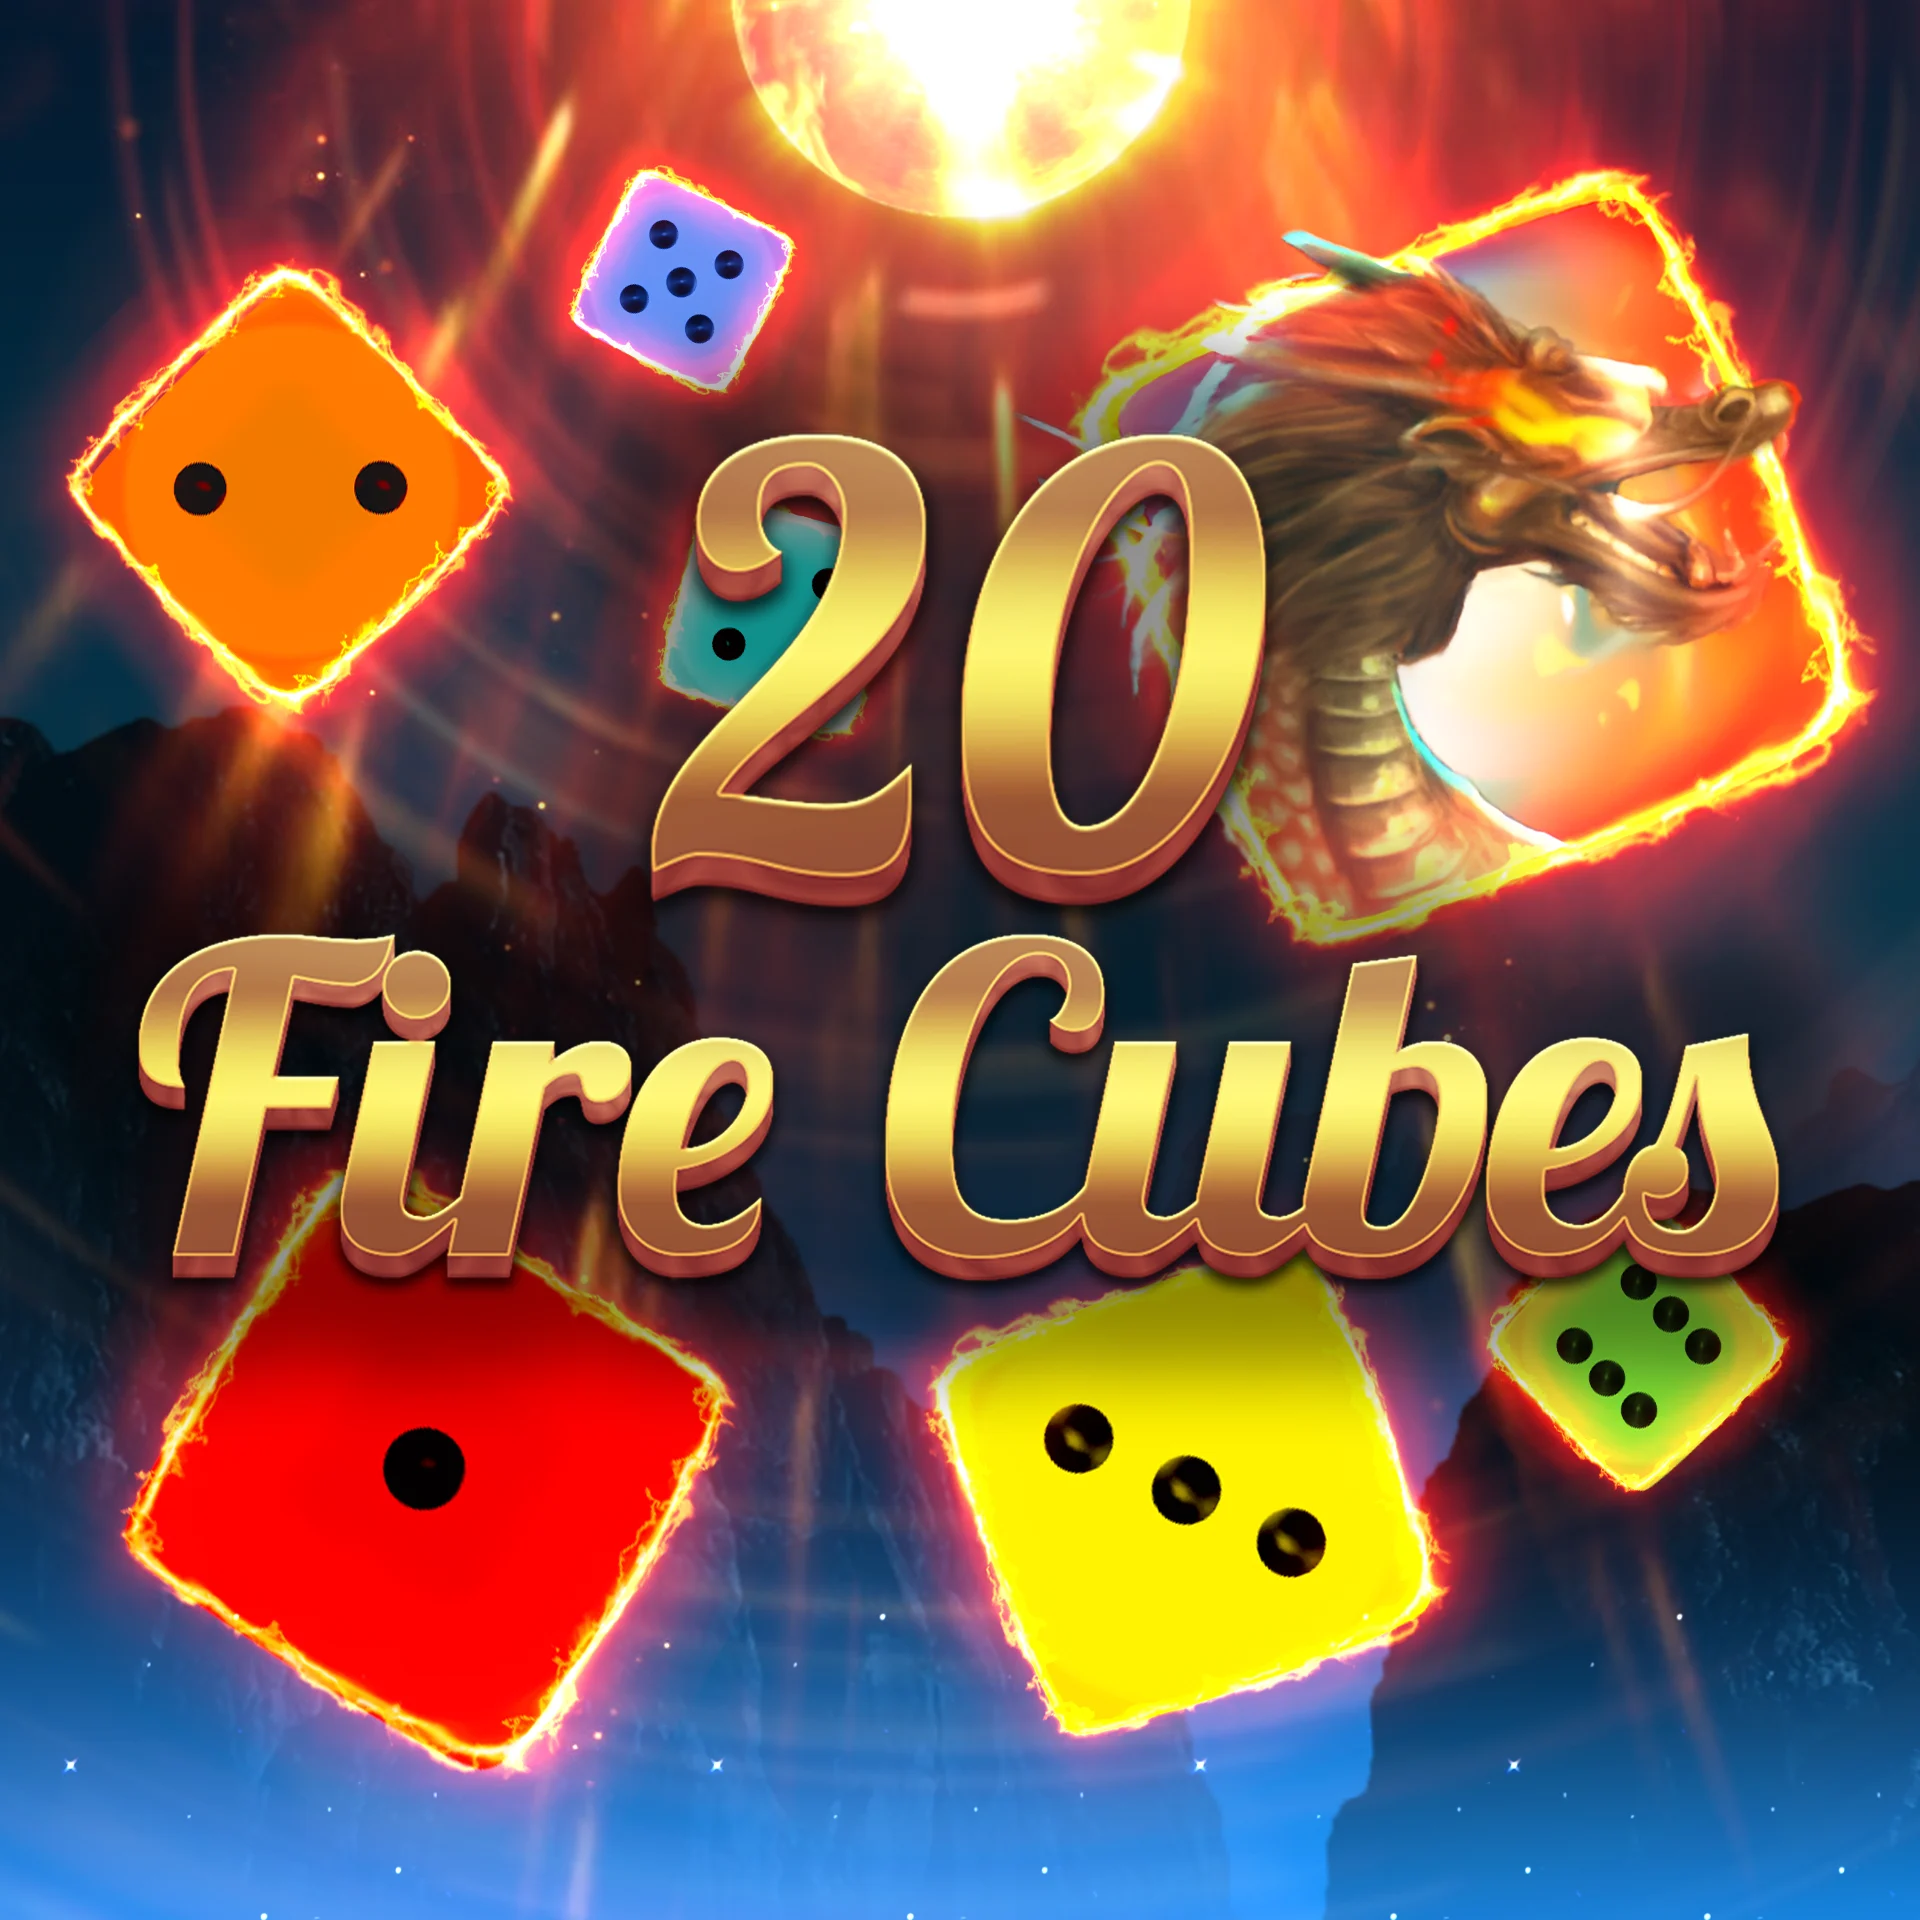 Play 20 Fire Cubes on Starcasinodice.be online casino